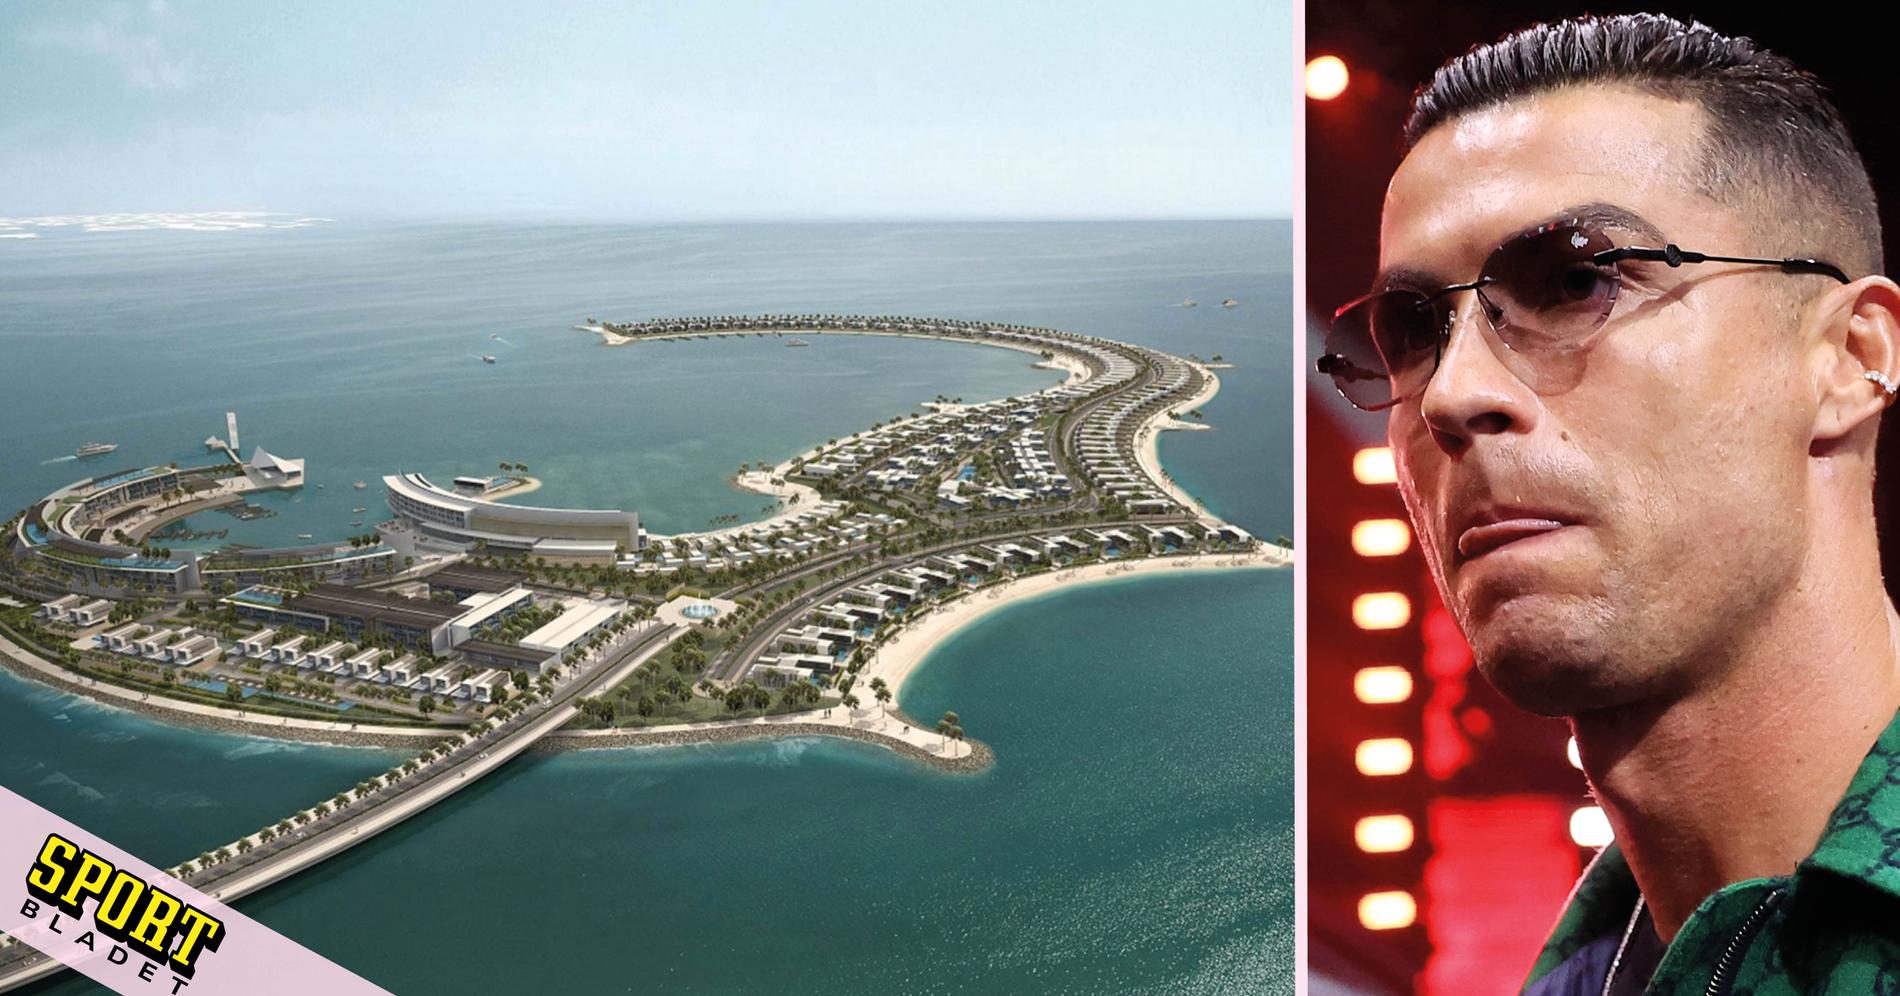 Cristiano Ronaldo’s Lavish Purchase on Billionaires Island in Dubai